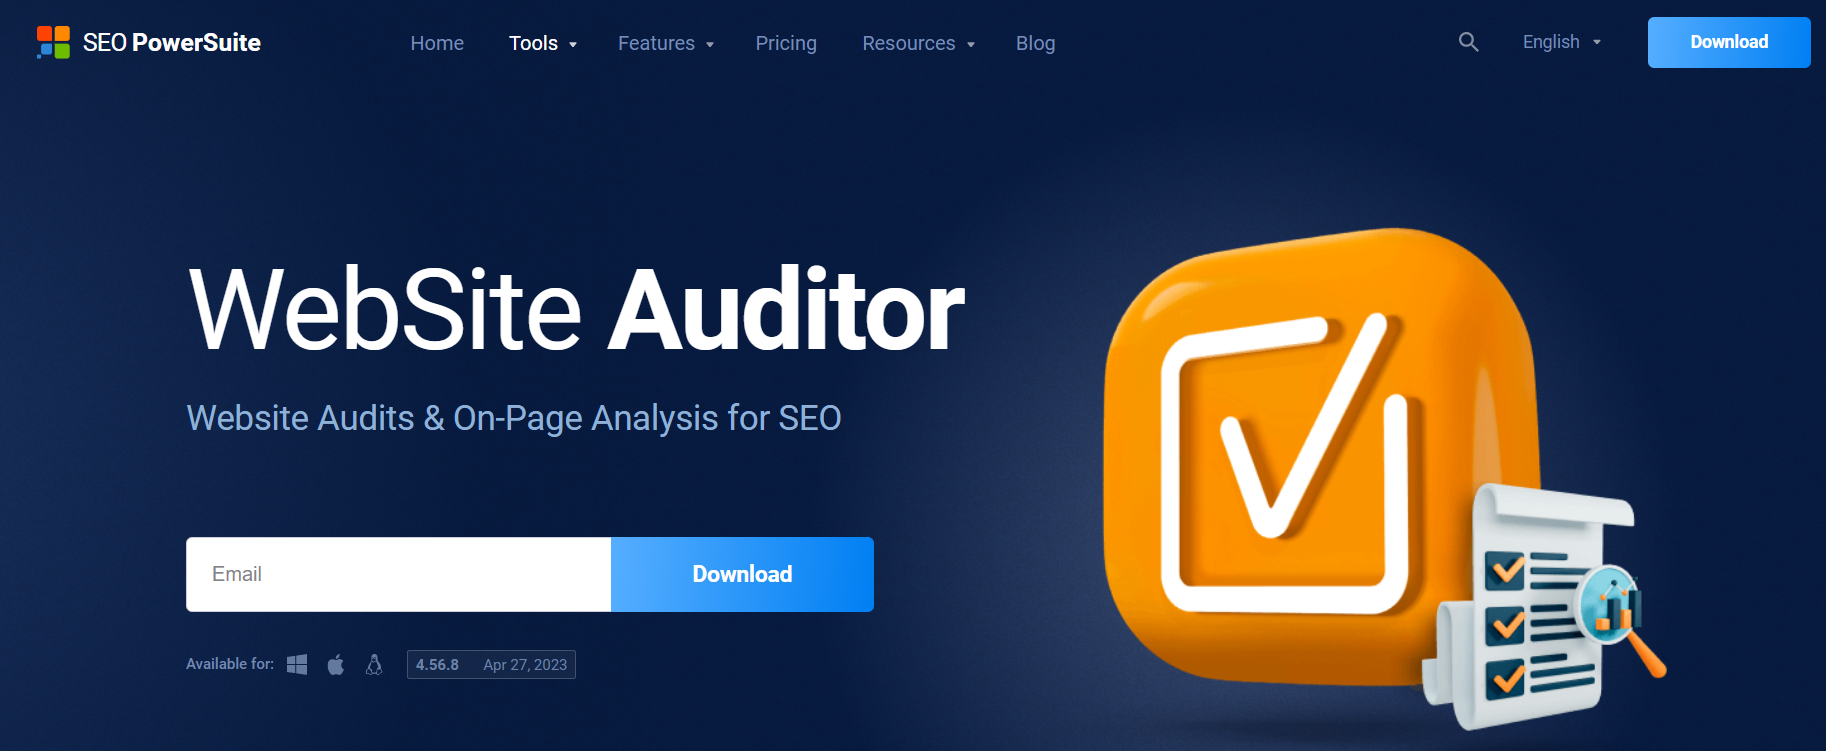 SEO PowerSuite Web Auditor